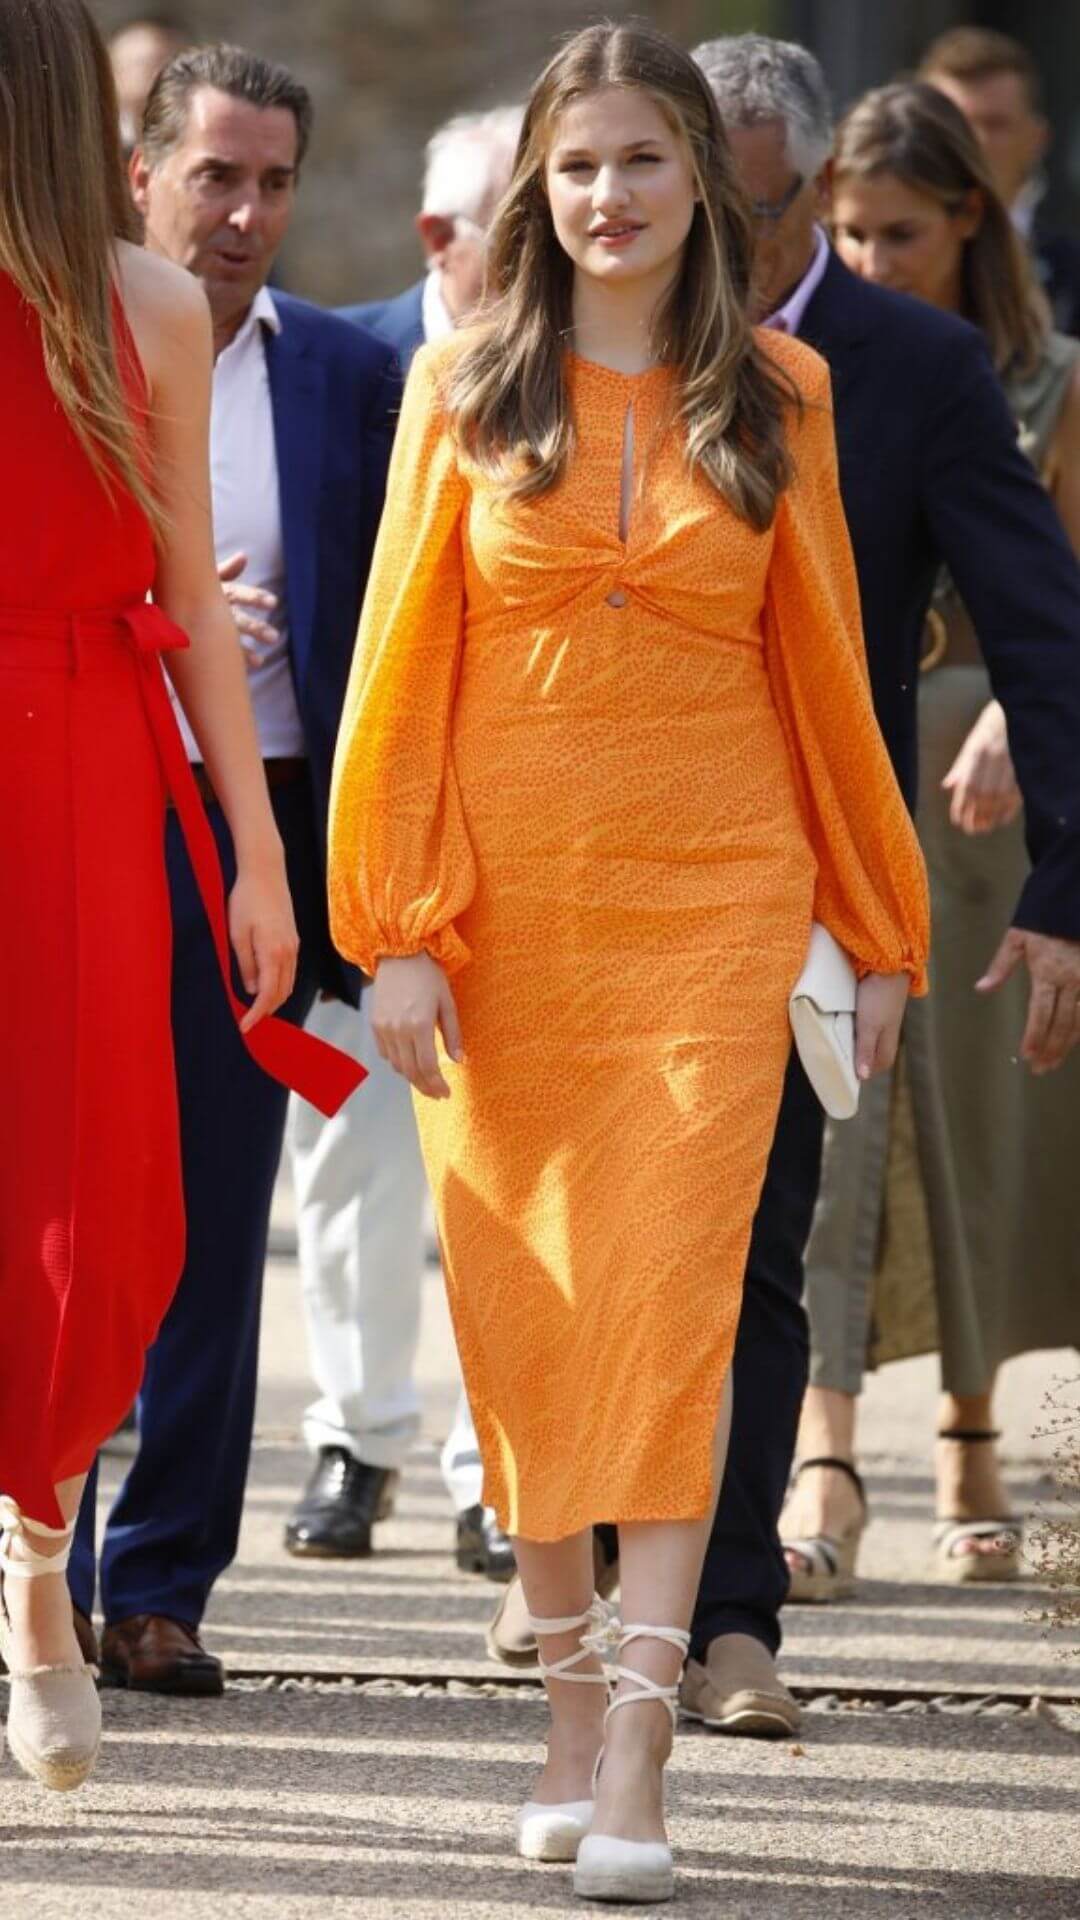 Princess Leonor's orange dress at a royal event